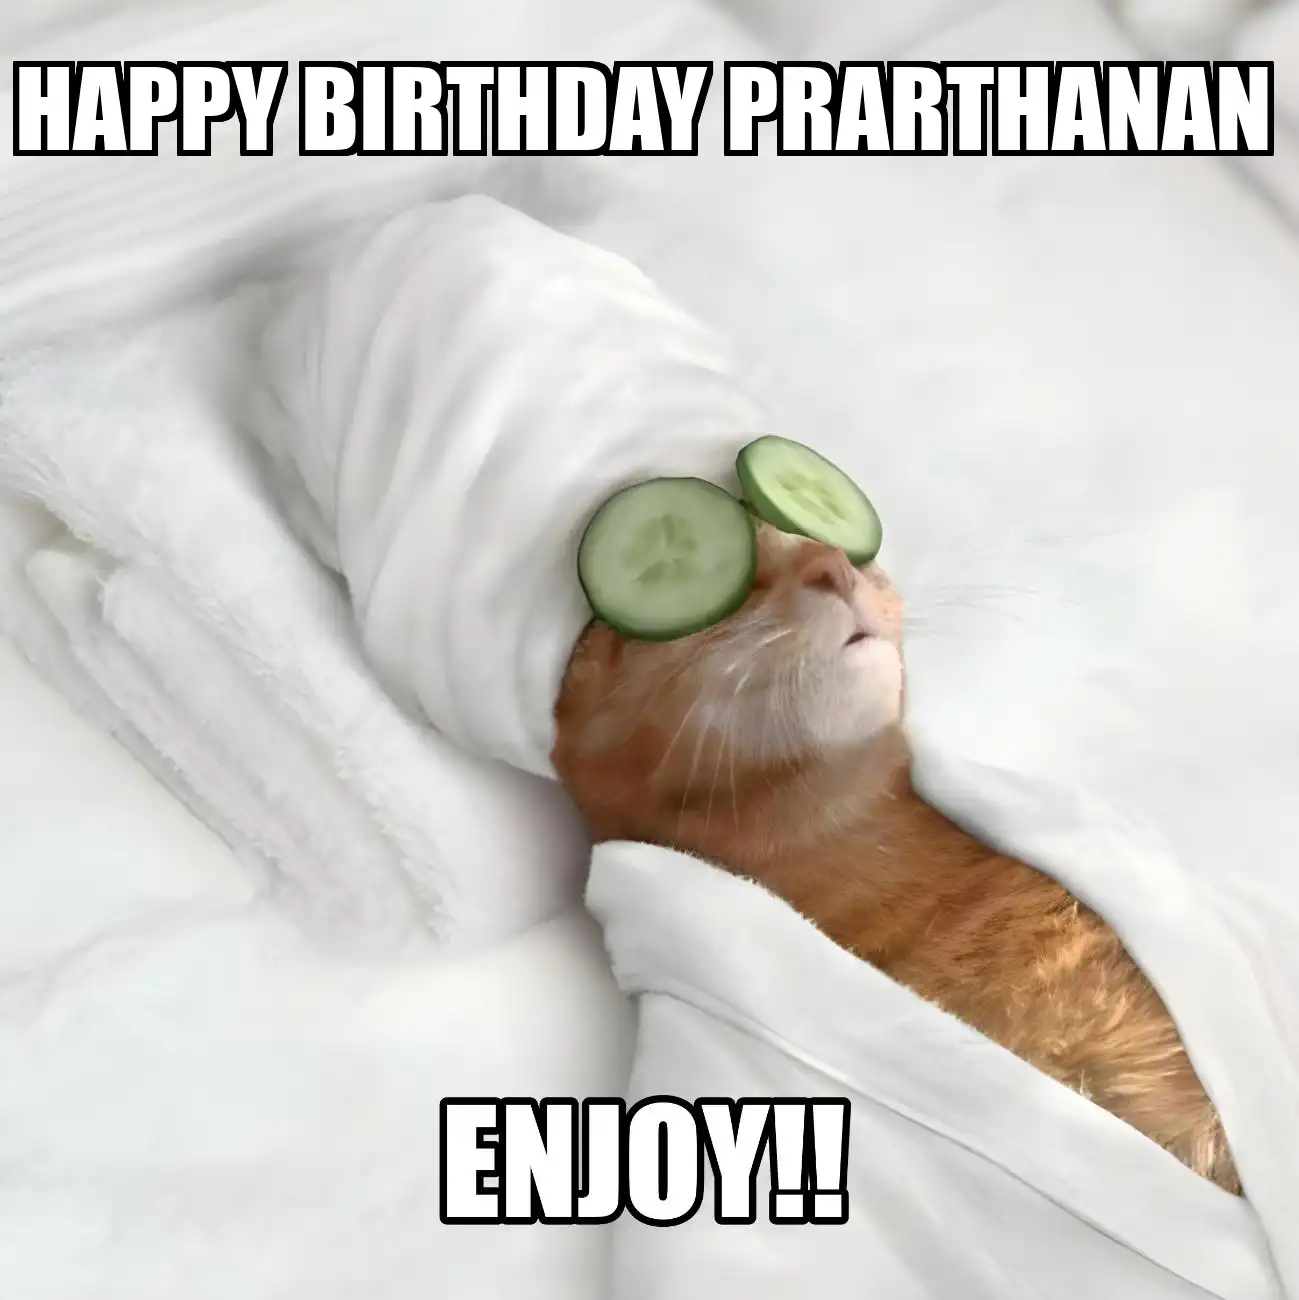 Happy Birthday Prarthanan Enjoy Cat Meme